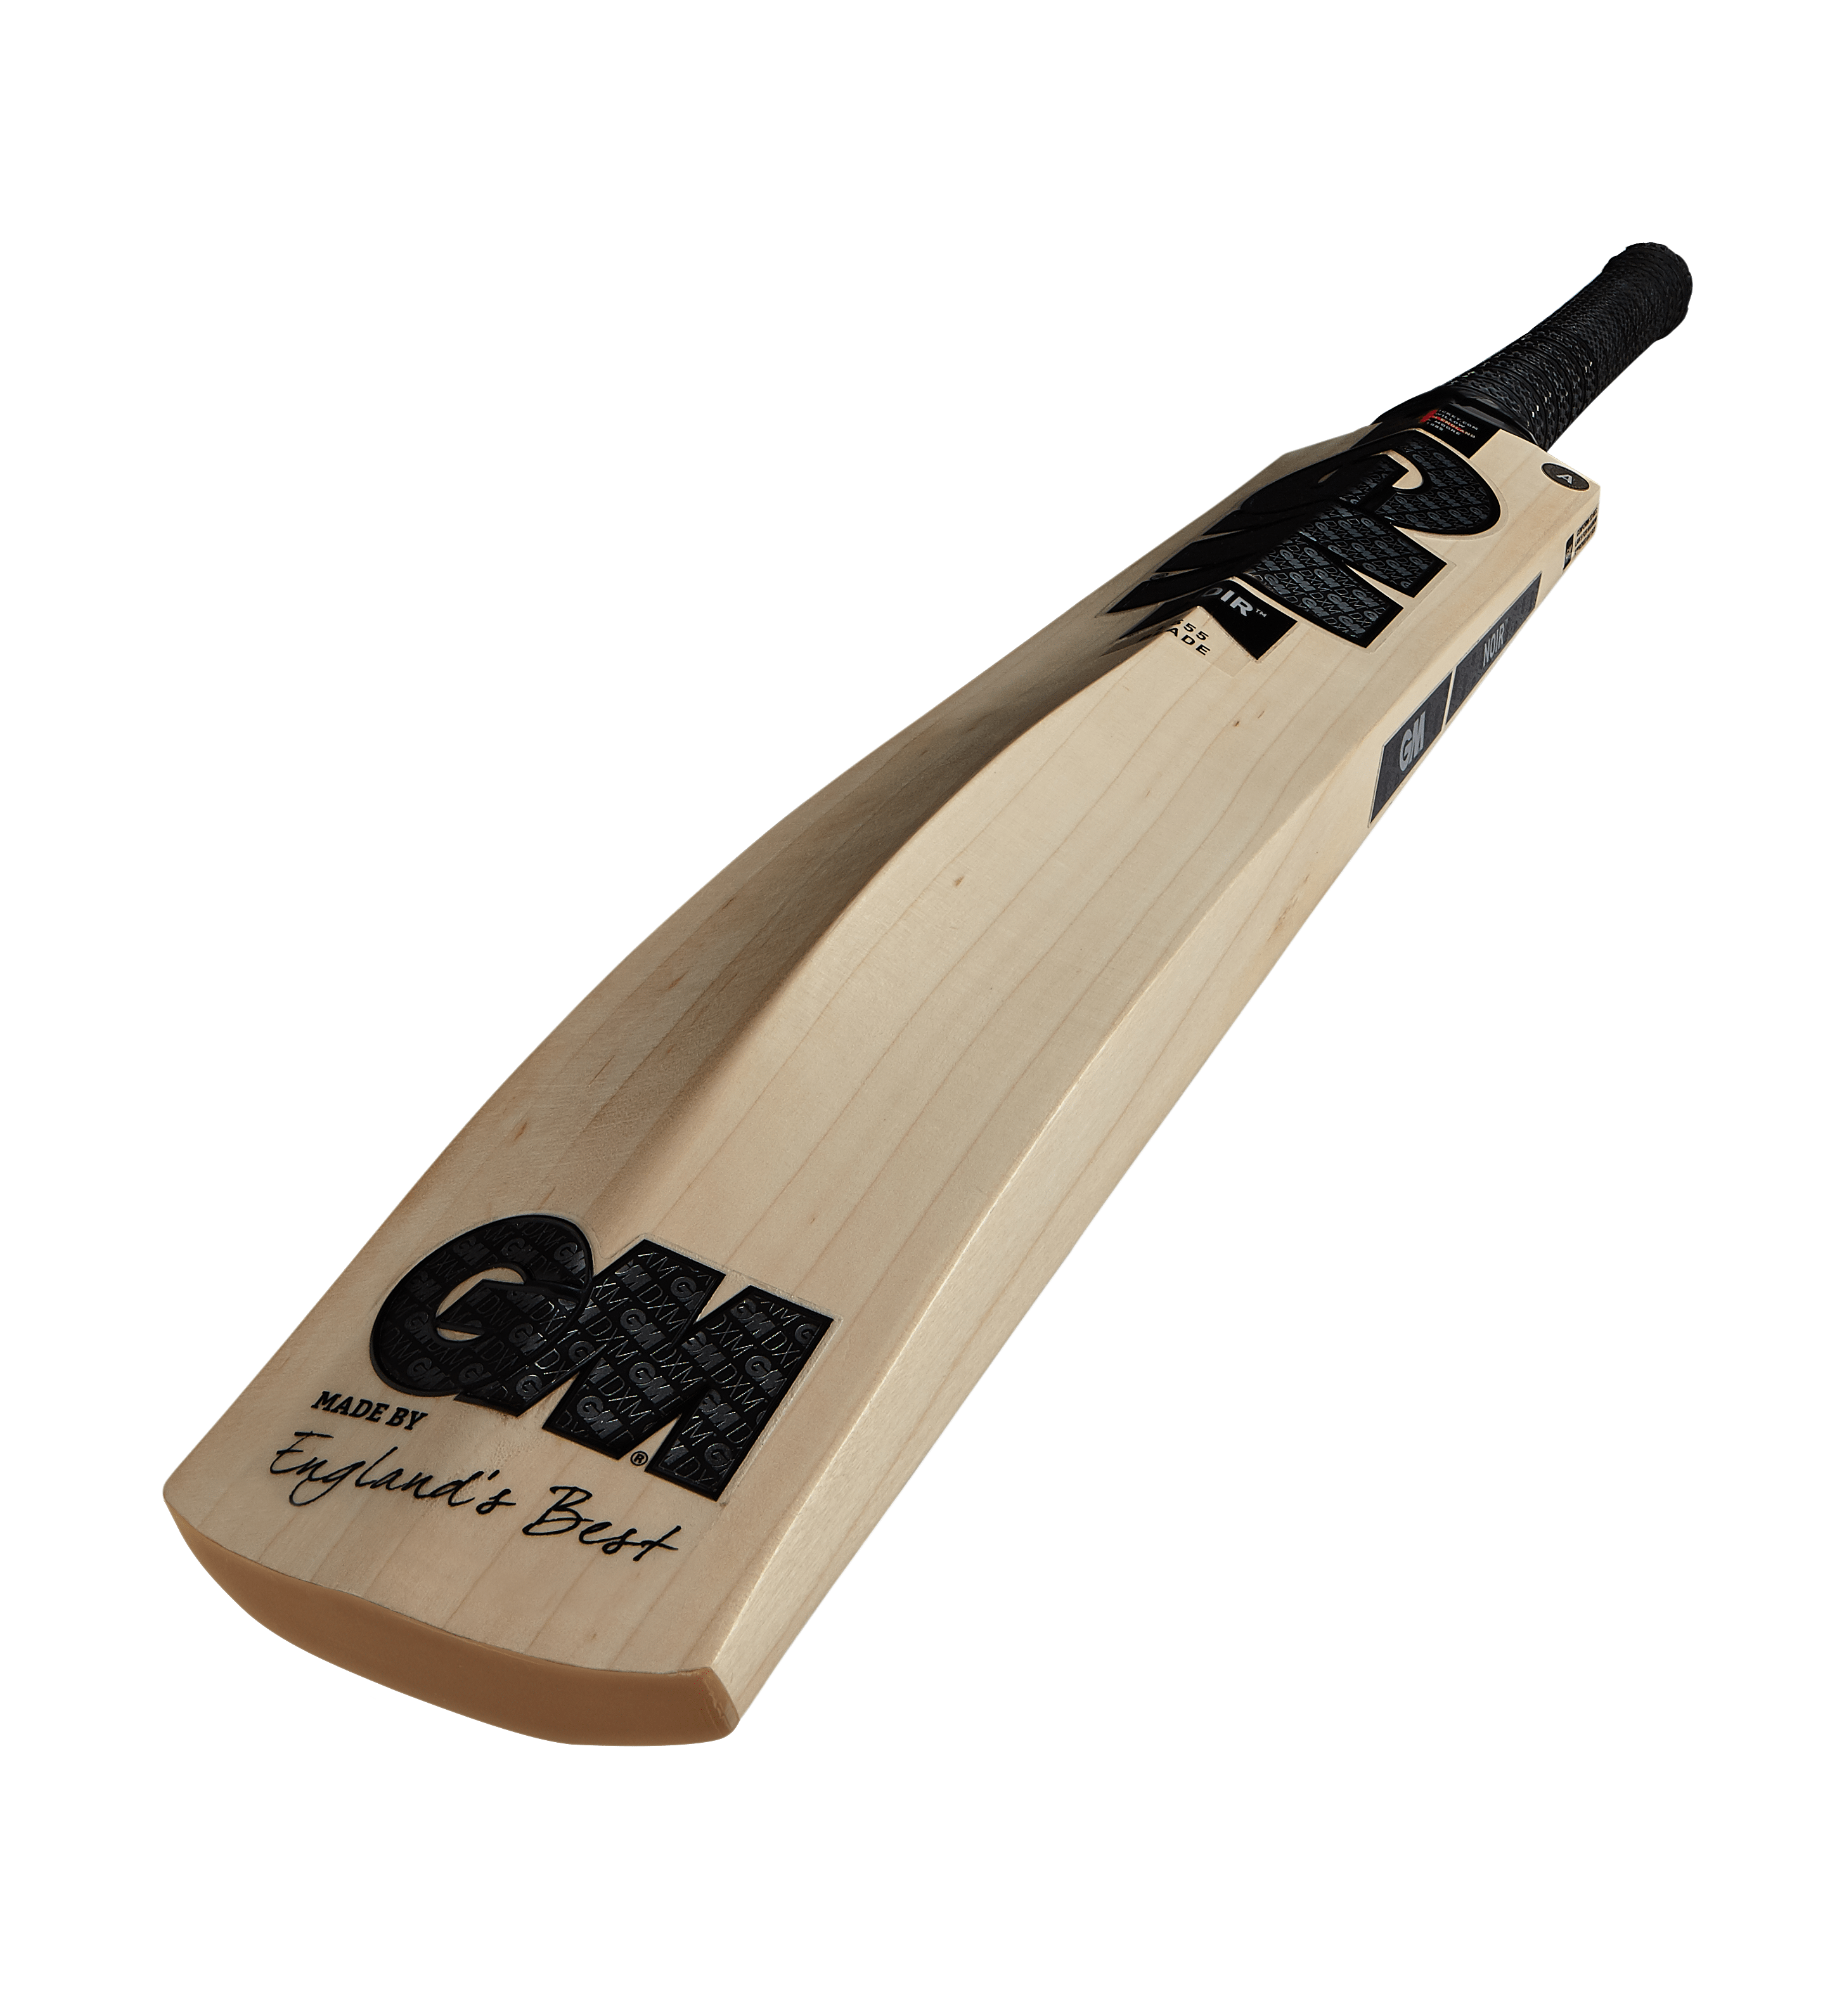 Gunn & Moore Cricket Bats SH / 2.9 GM Bat Noir Dxm LE TTnow